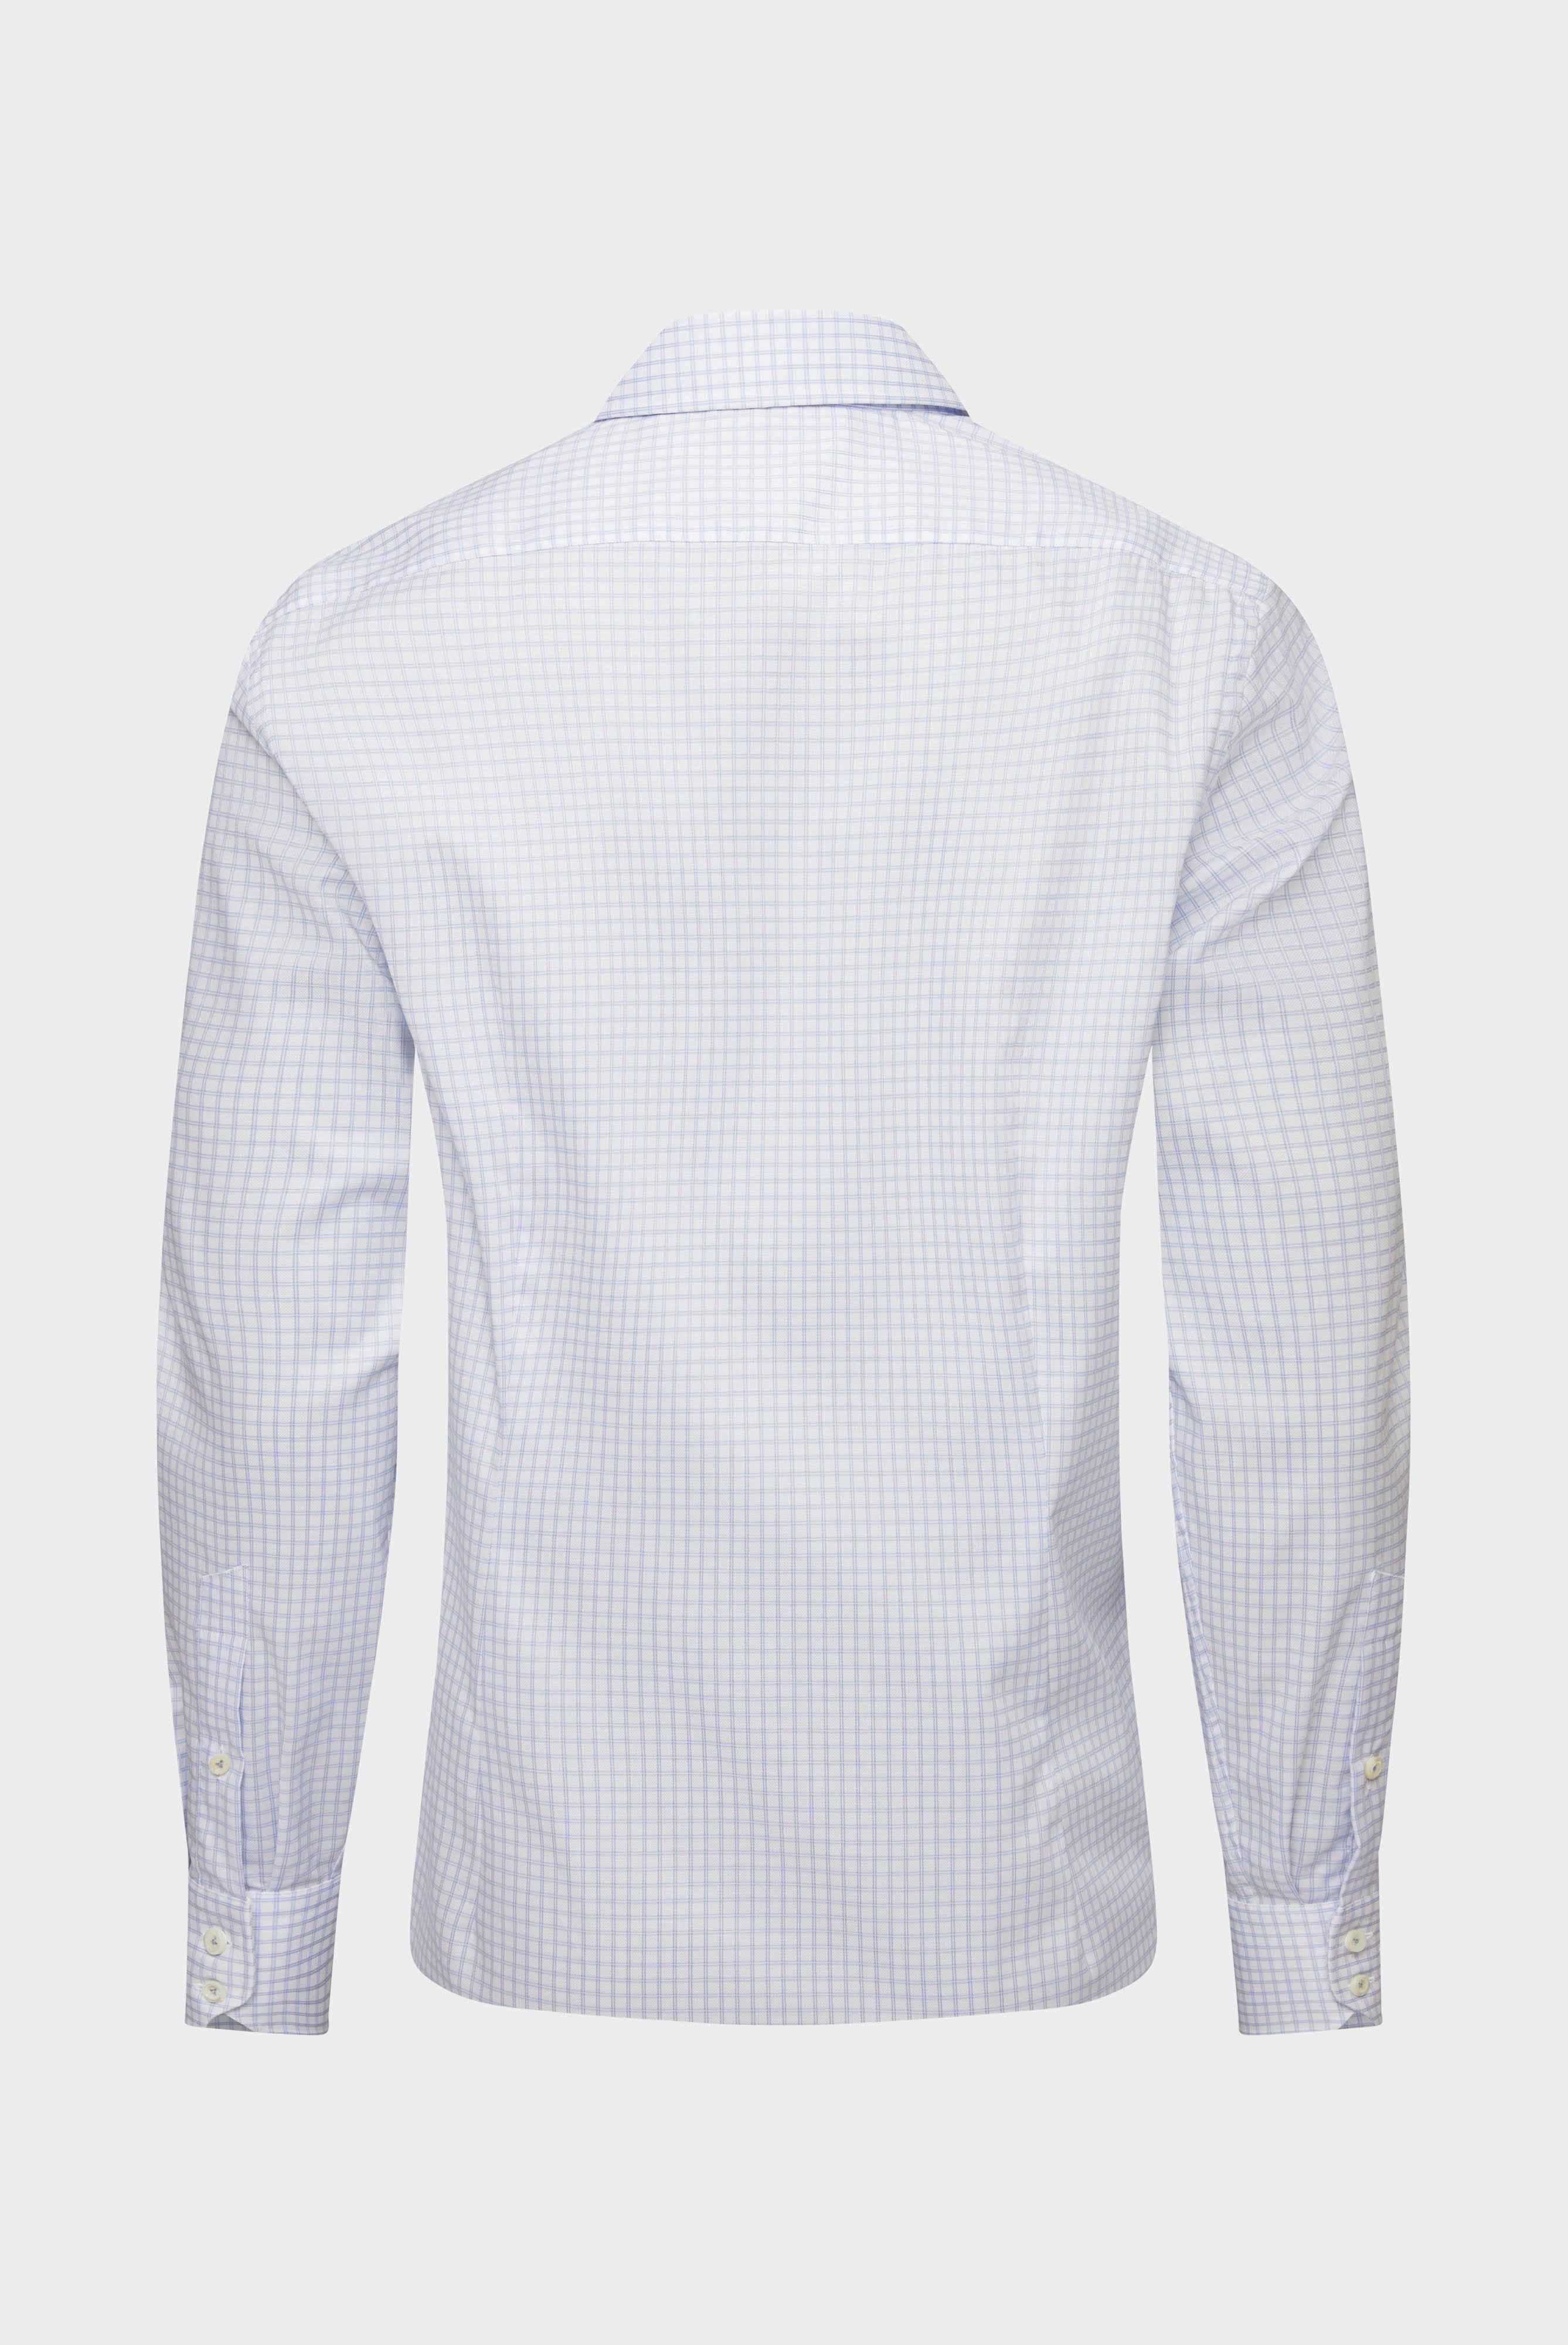 Easy Iron Shirts+Wrinkle Free Checkeed Business Shirt Slim Fit+20.2019.BQ.151545.720.38